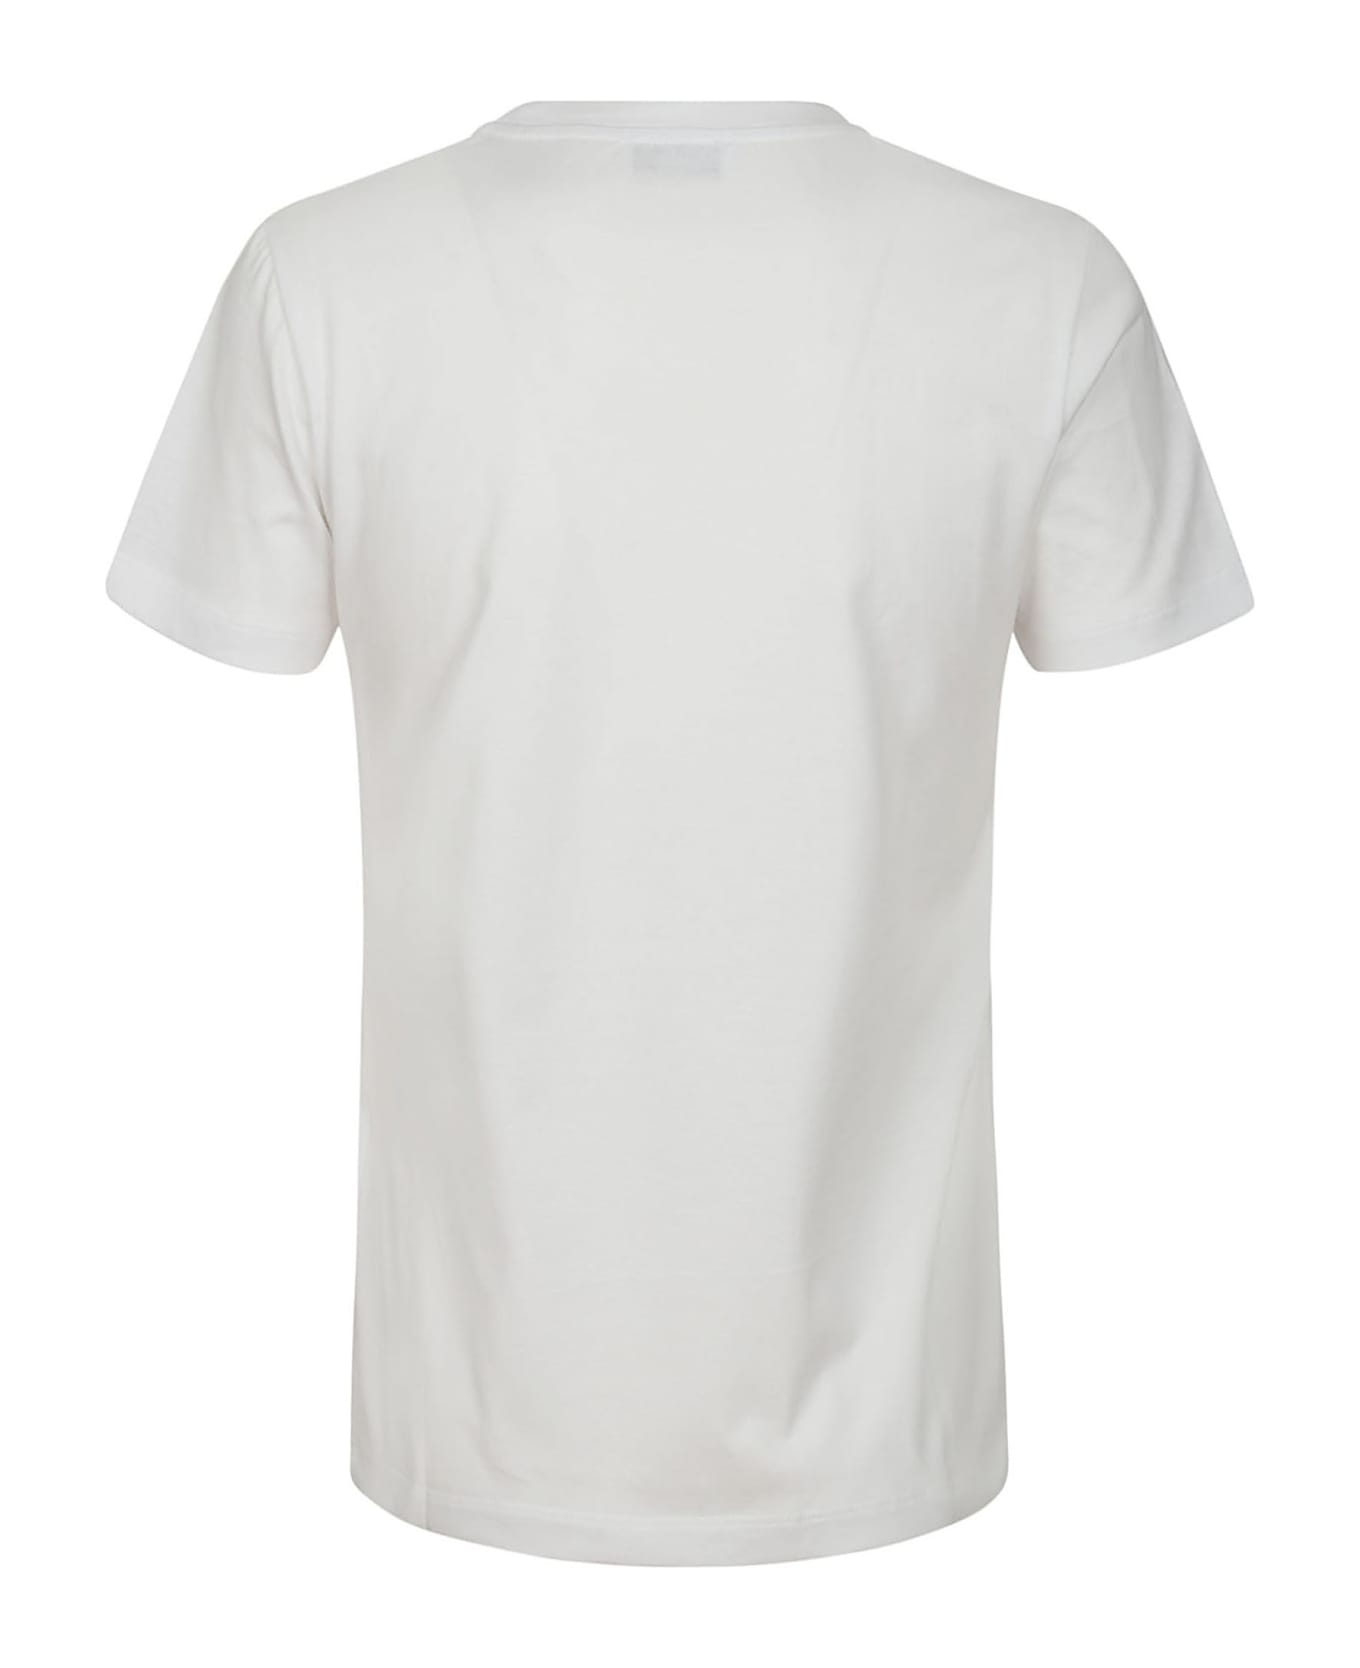 Dondup T-shirt - White Tシャツ